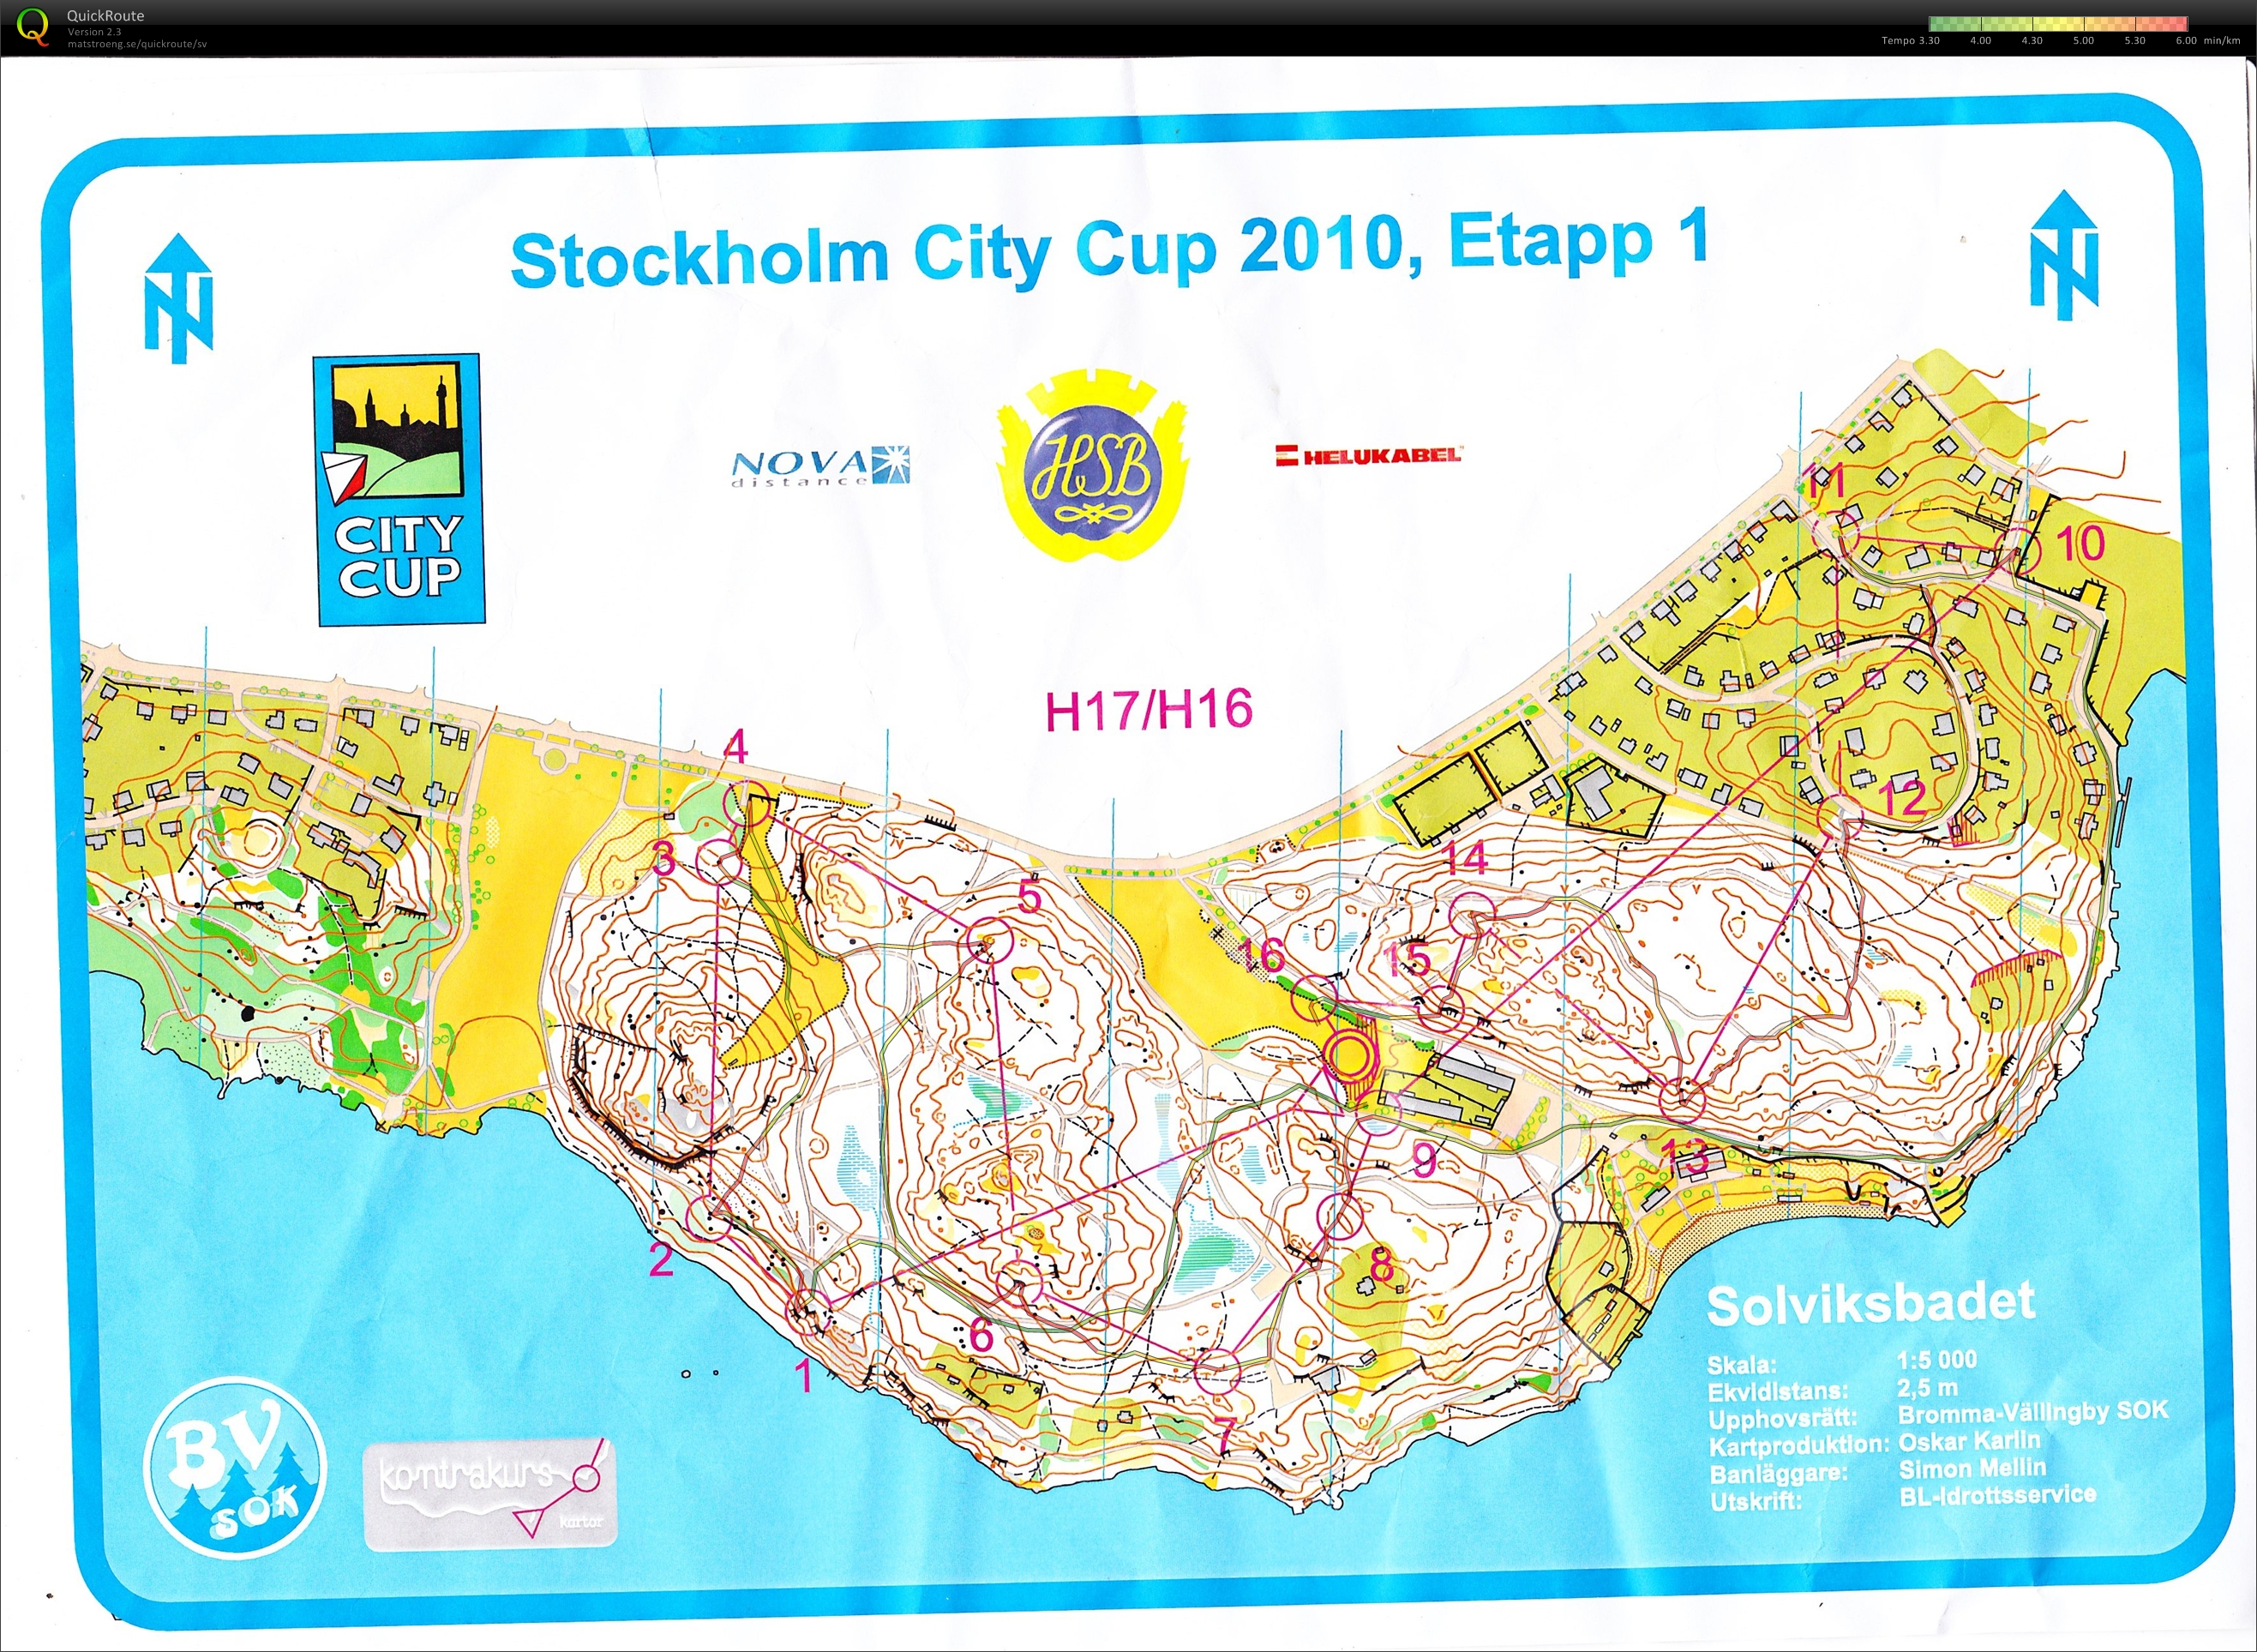 Stockholm City Cup, etapp 1 (19-05-2010)